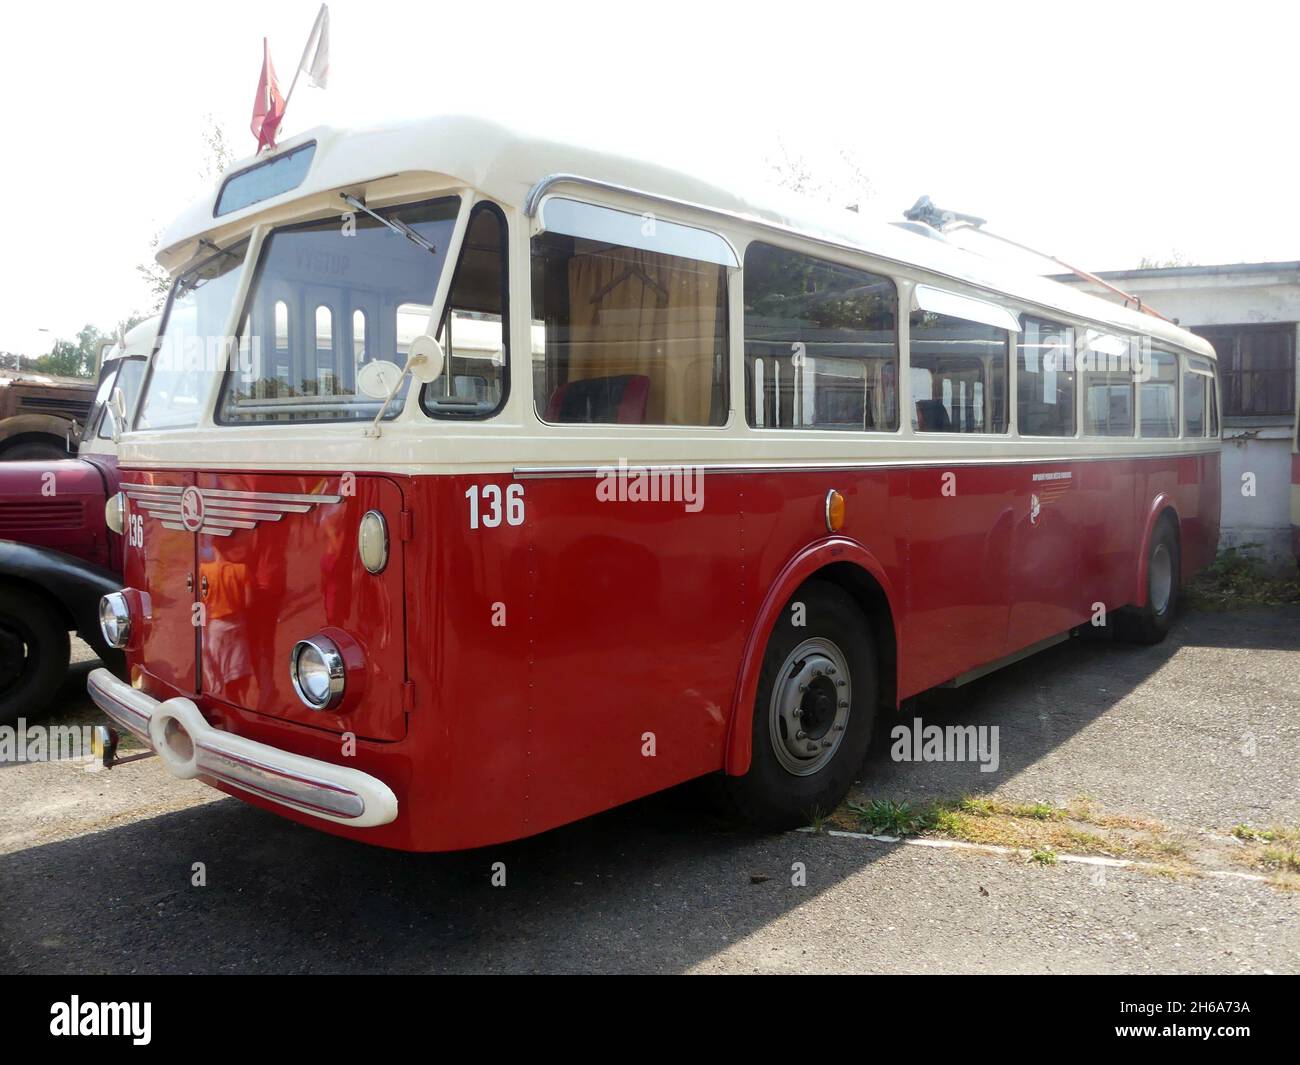 PARDUBICE, CZECH REPUBLIC - Sep 10, 2021: The Old Skoda bus at Retromestecko in the city of Pardubice in Czech Republic Stock Photo